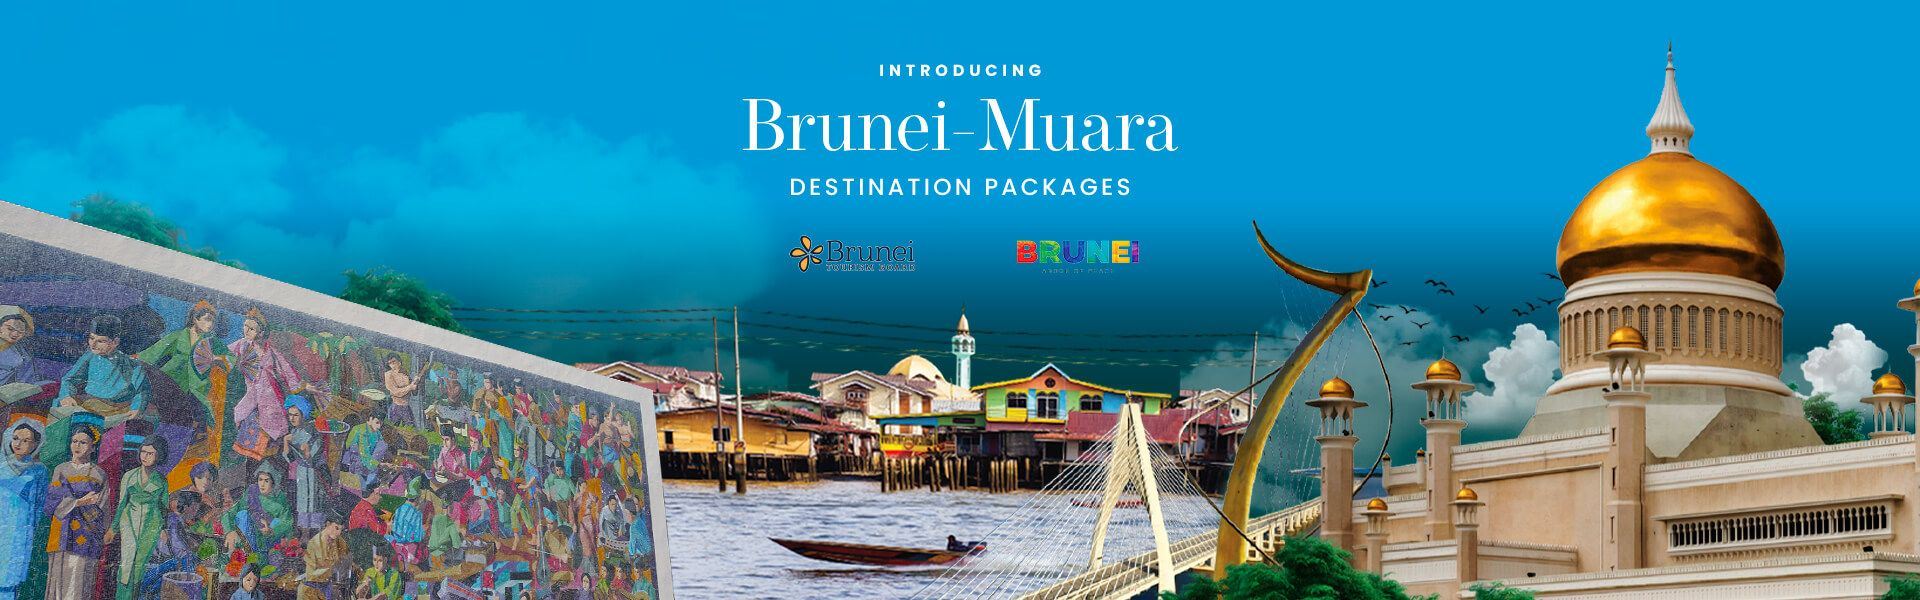 brunei tourism website